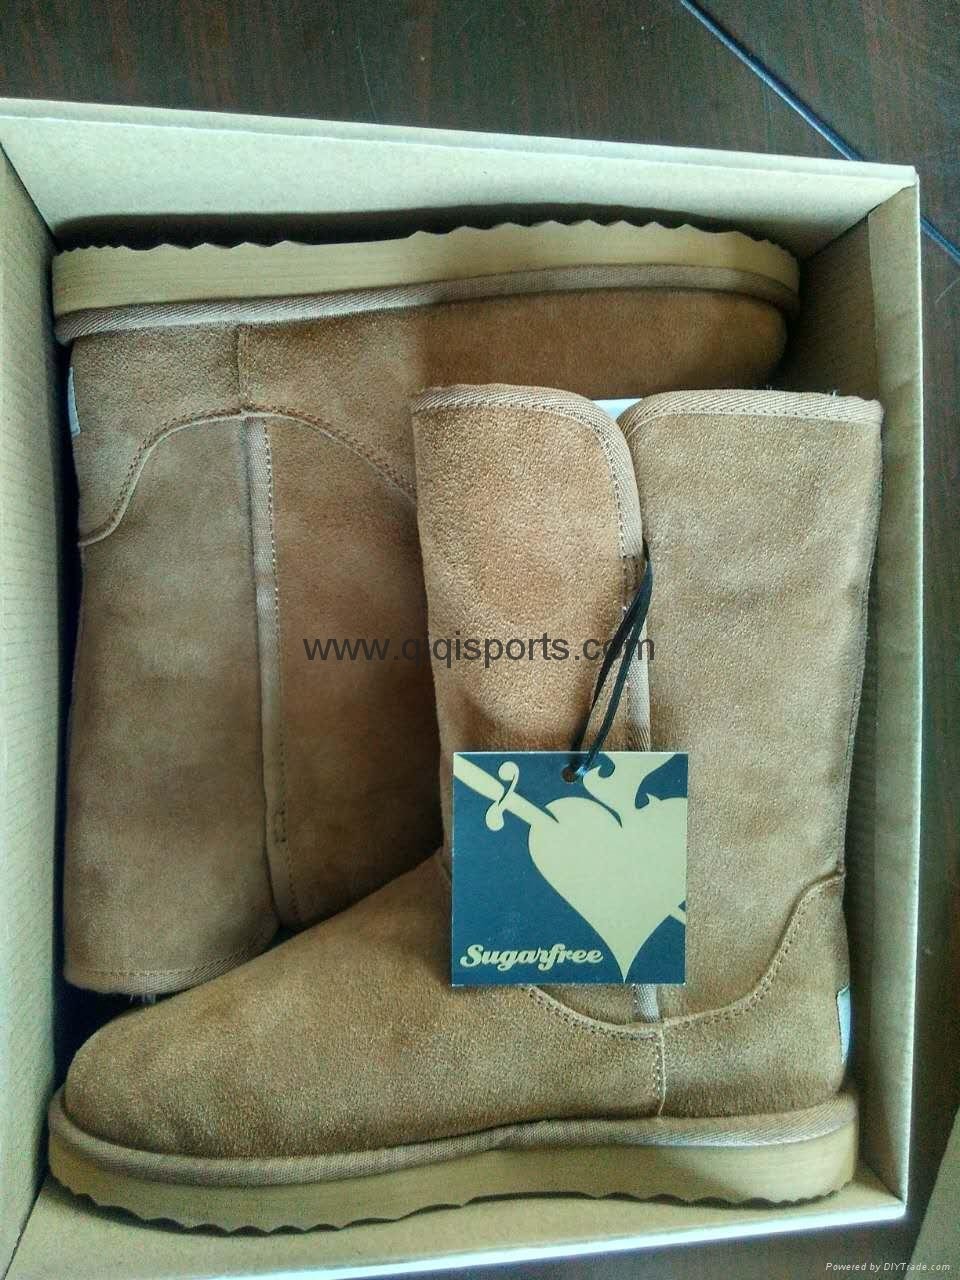 warm boots(qiqisports) 5